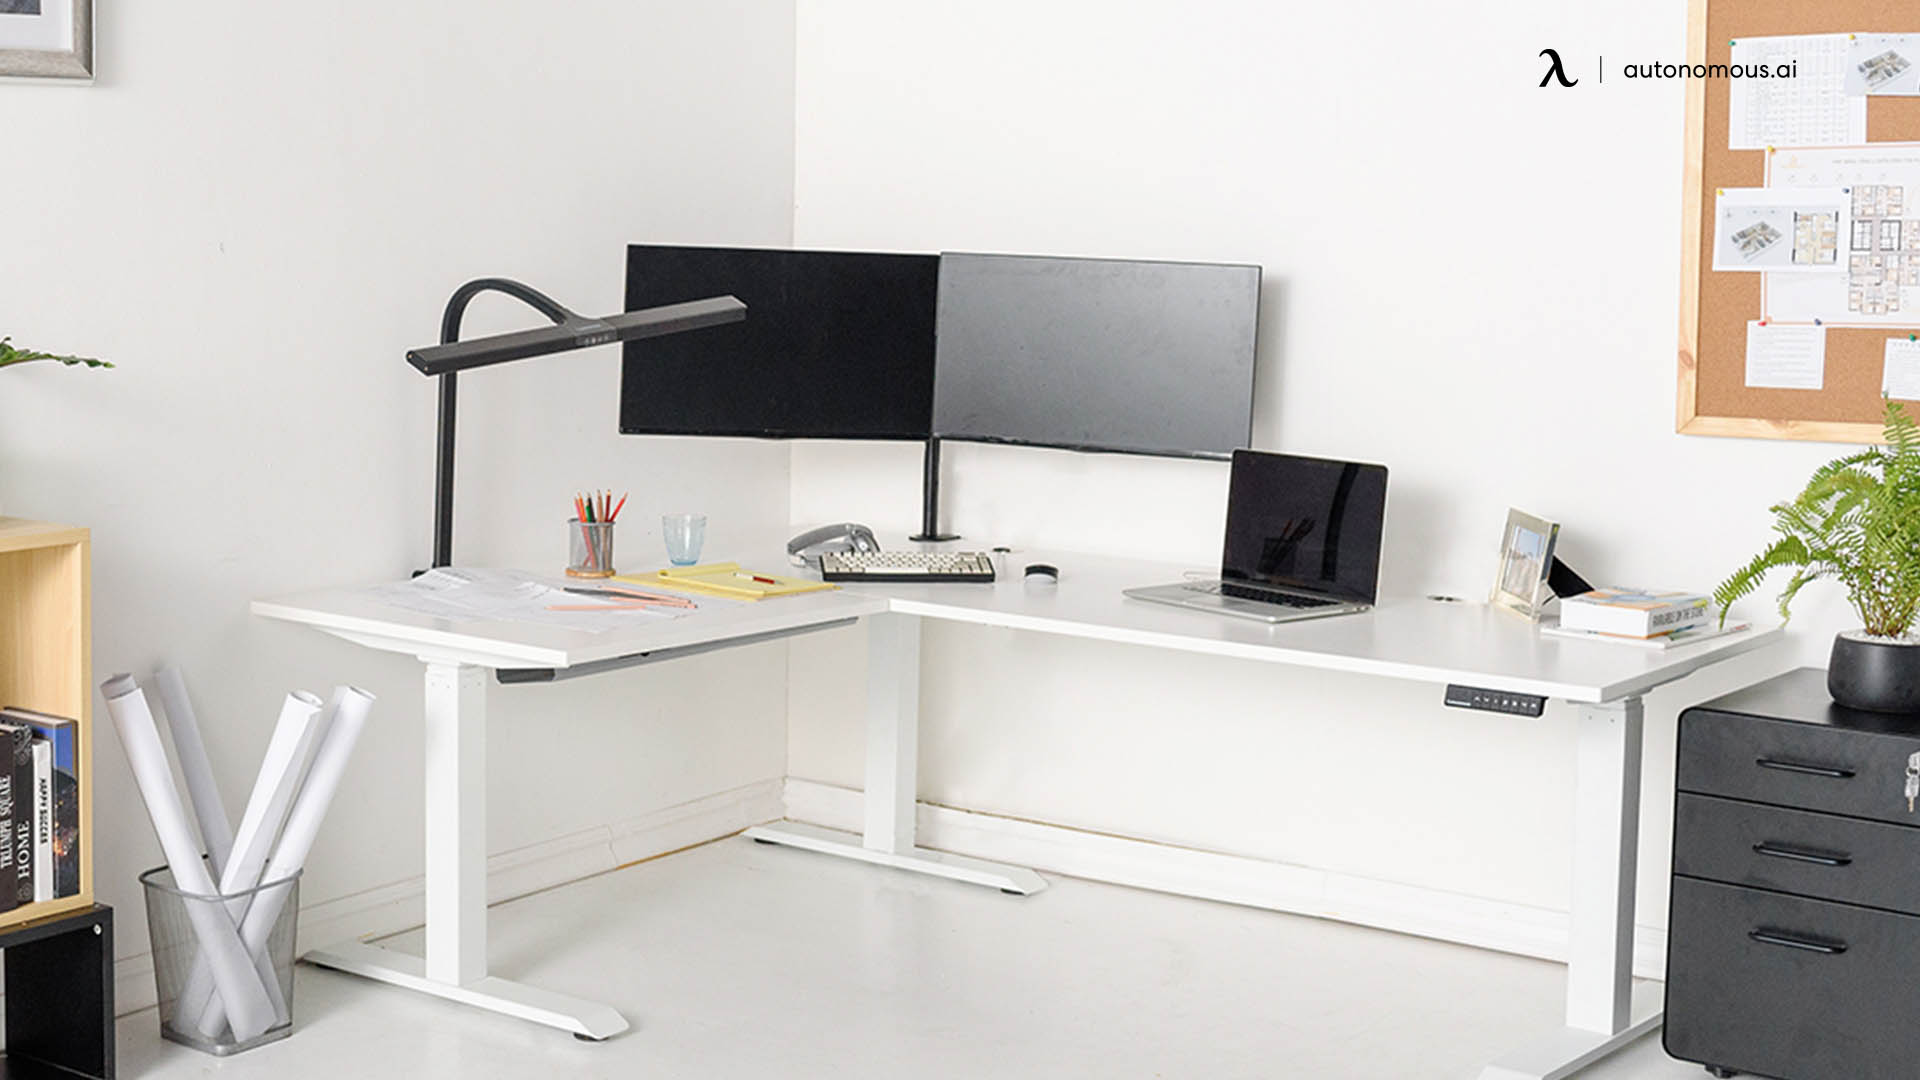 SmartDesk Corner modular desk system